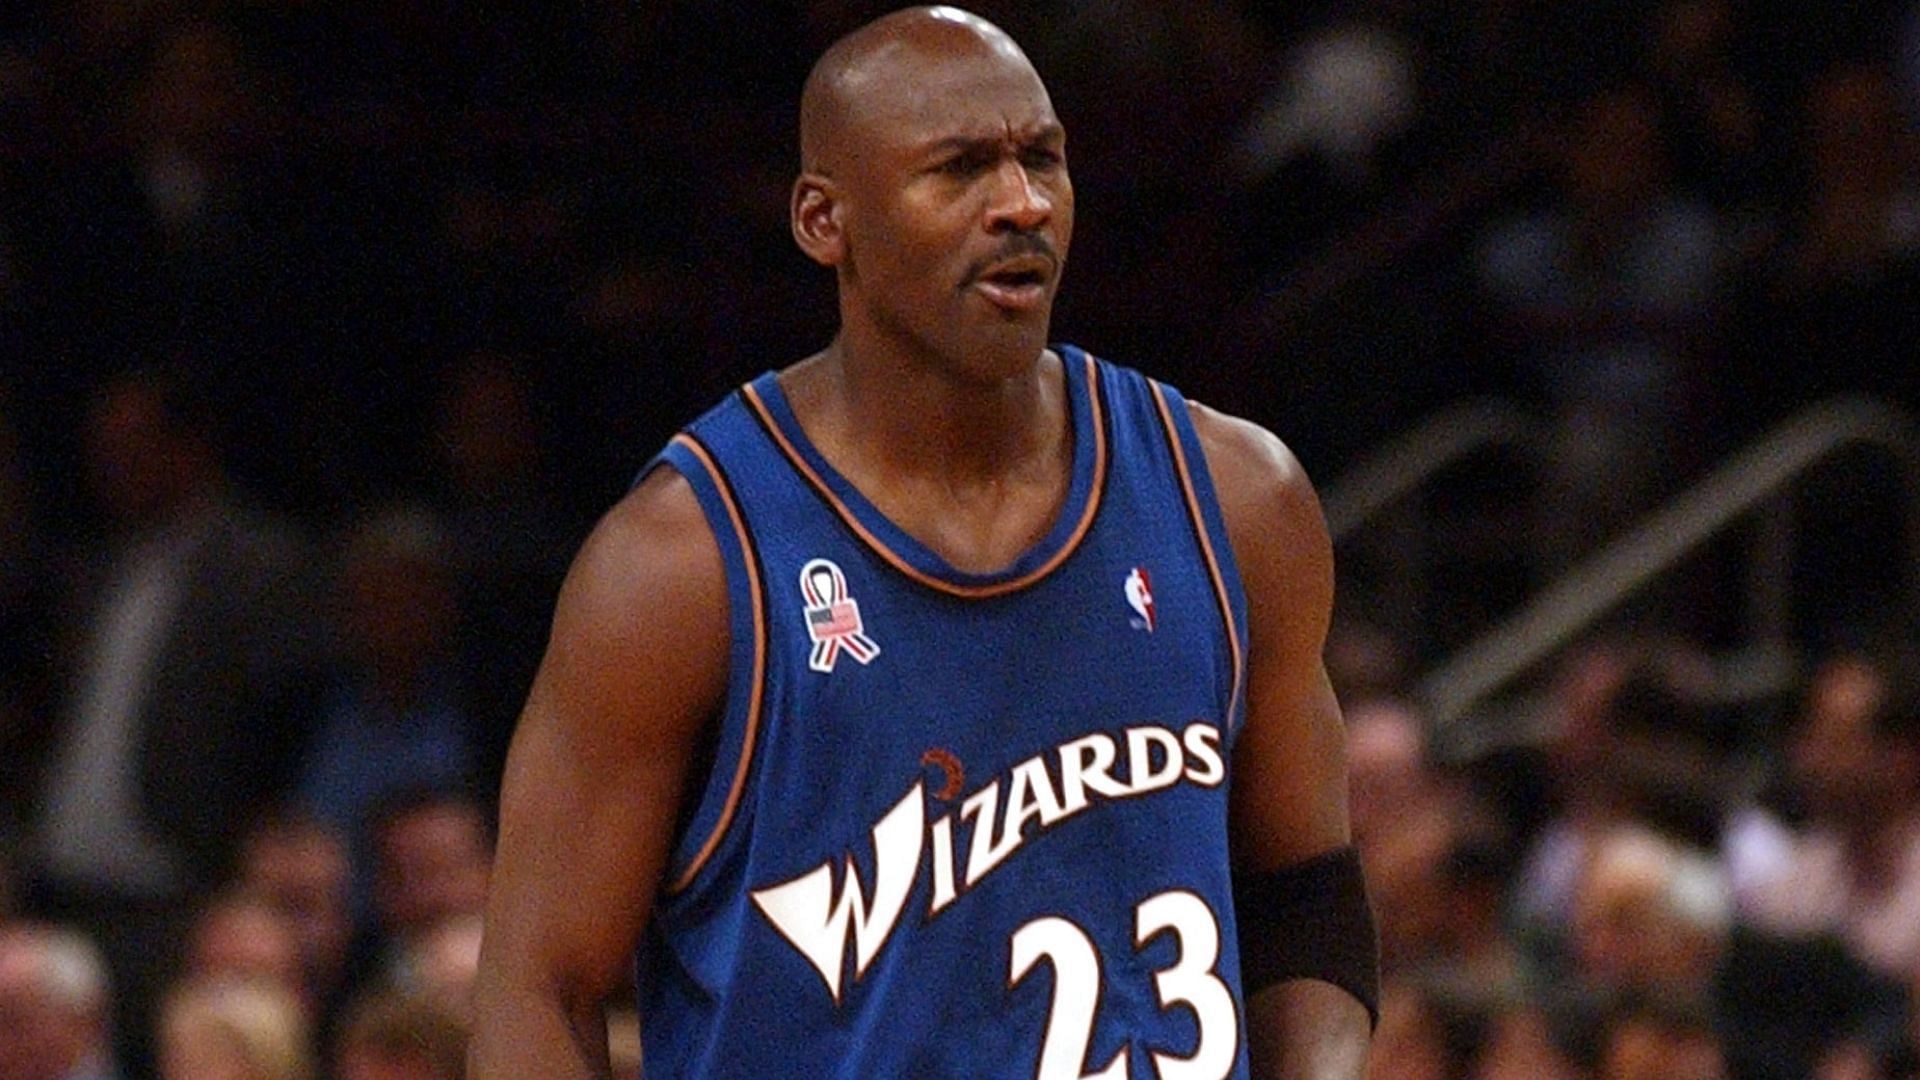 Michael Jordan with the Washington Wizards